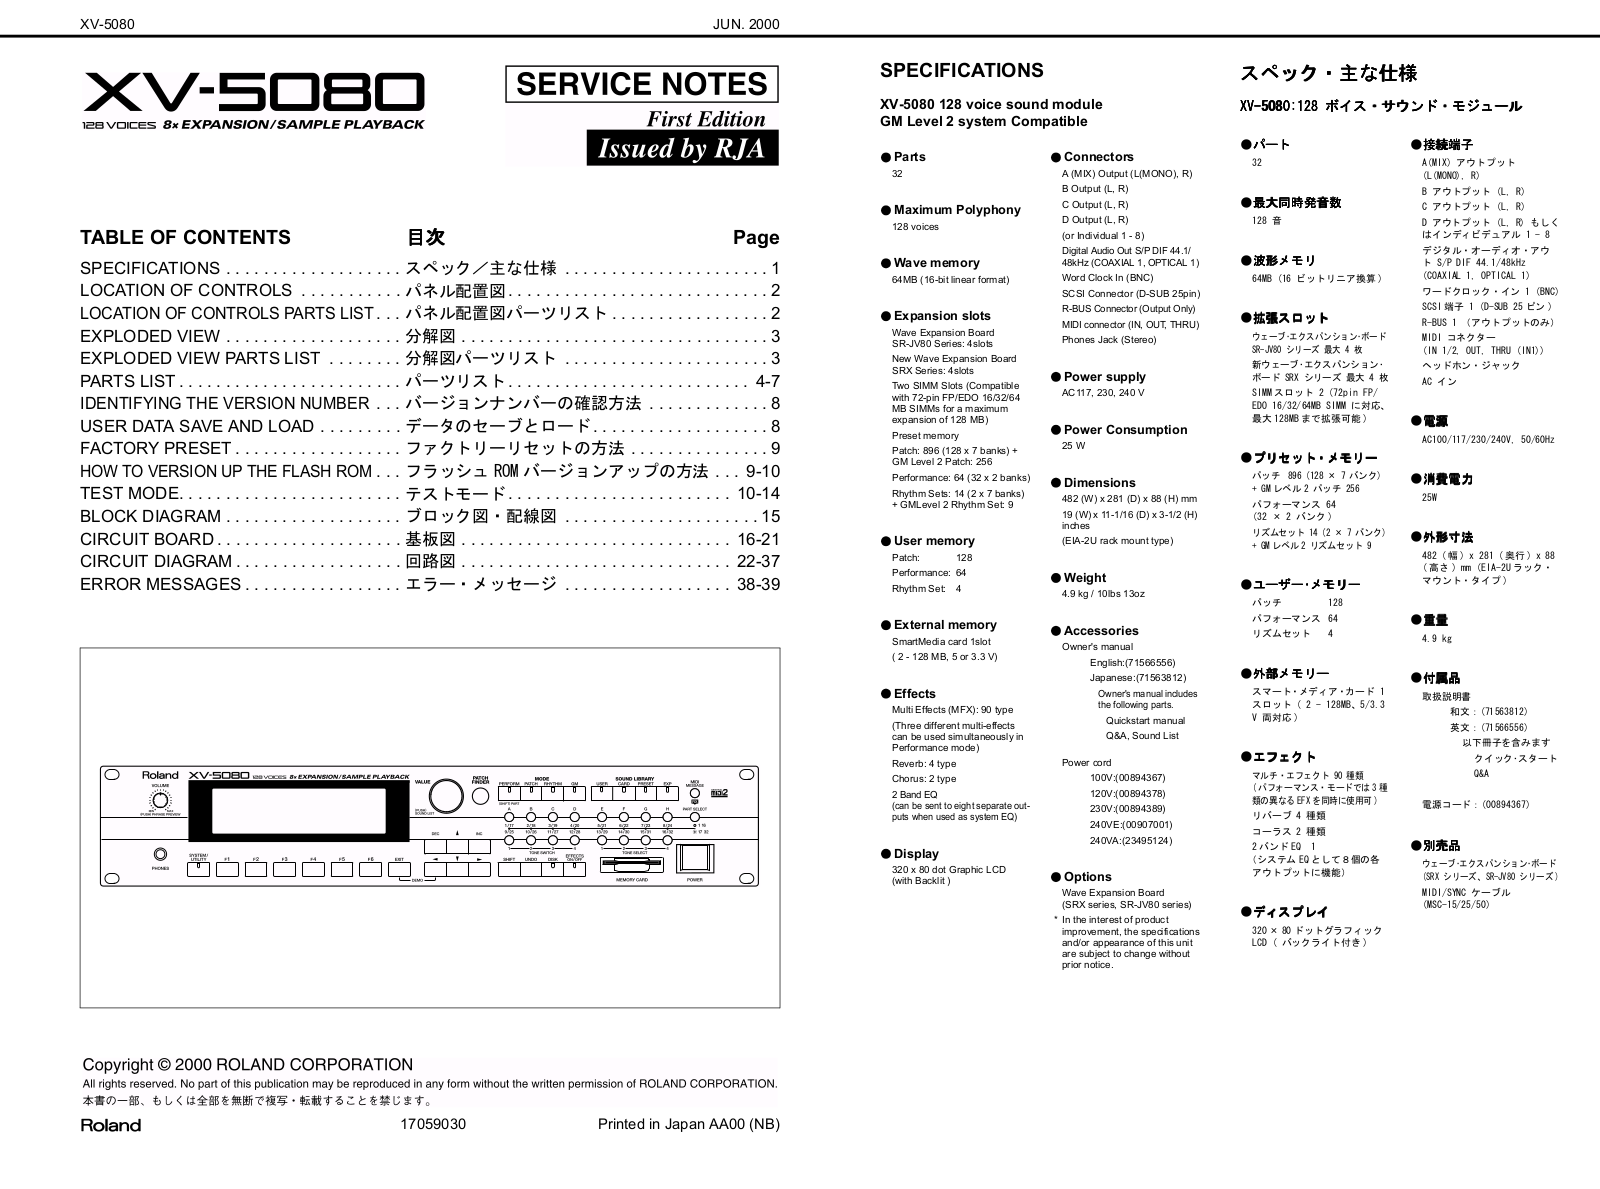 Roland XV-5080 Service Notes